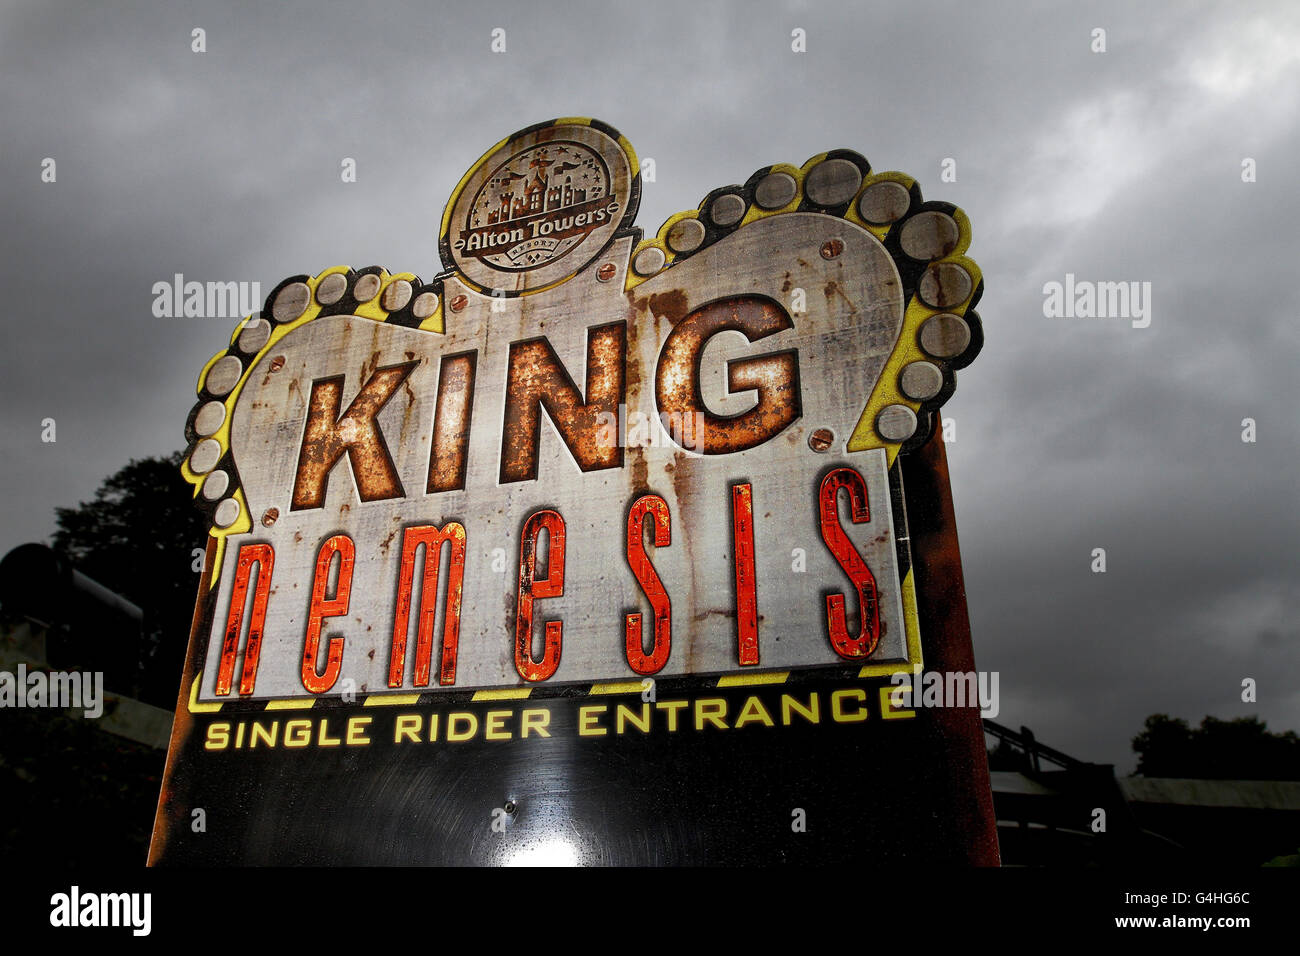 king-of-the-coasters-vote-G4HG6C.jpg